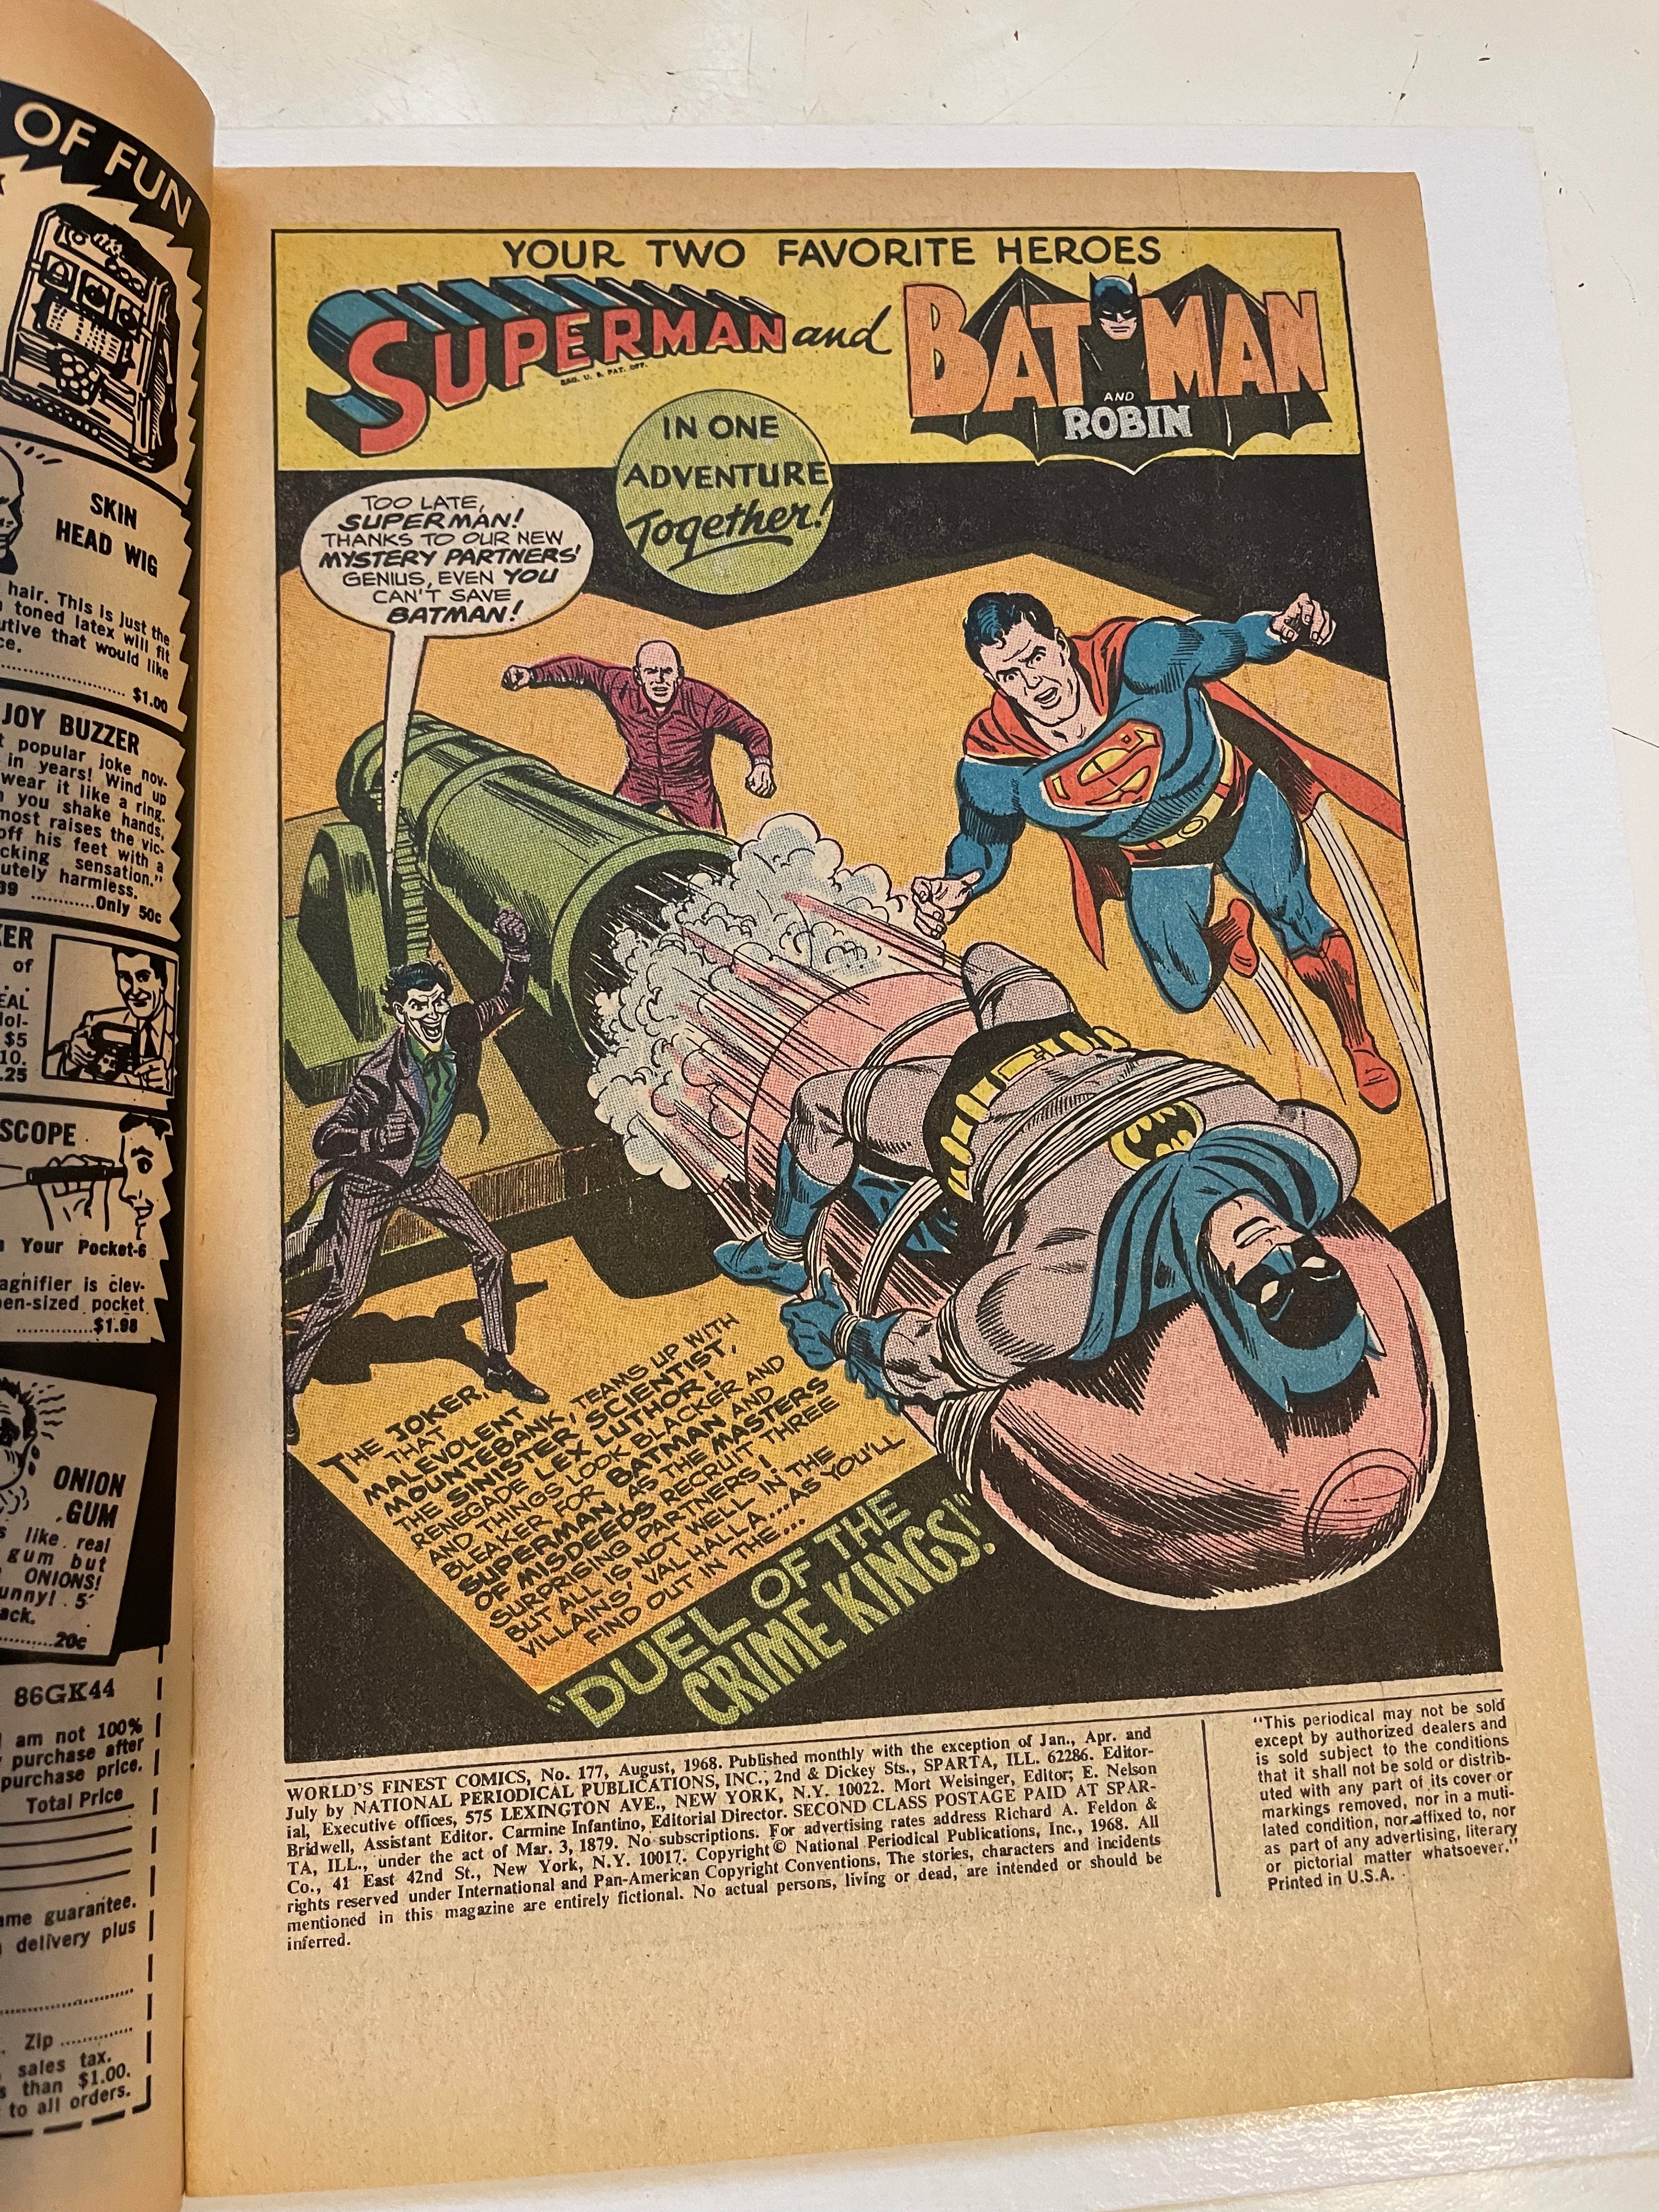 World’s Finest #177 comic book 1968